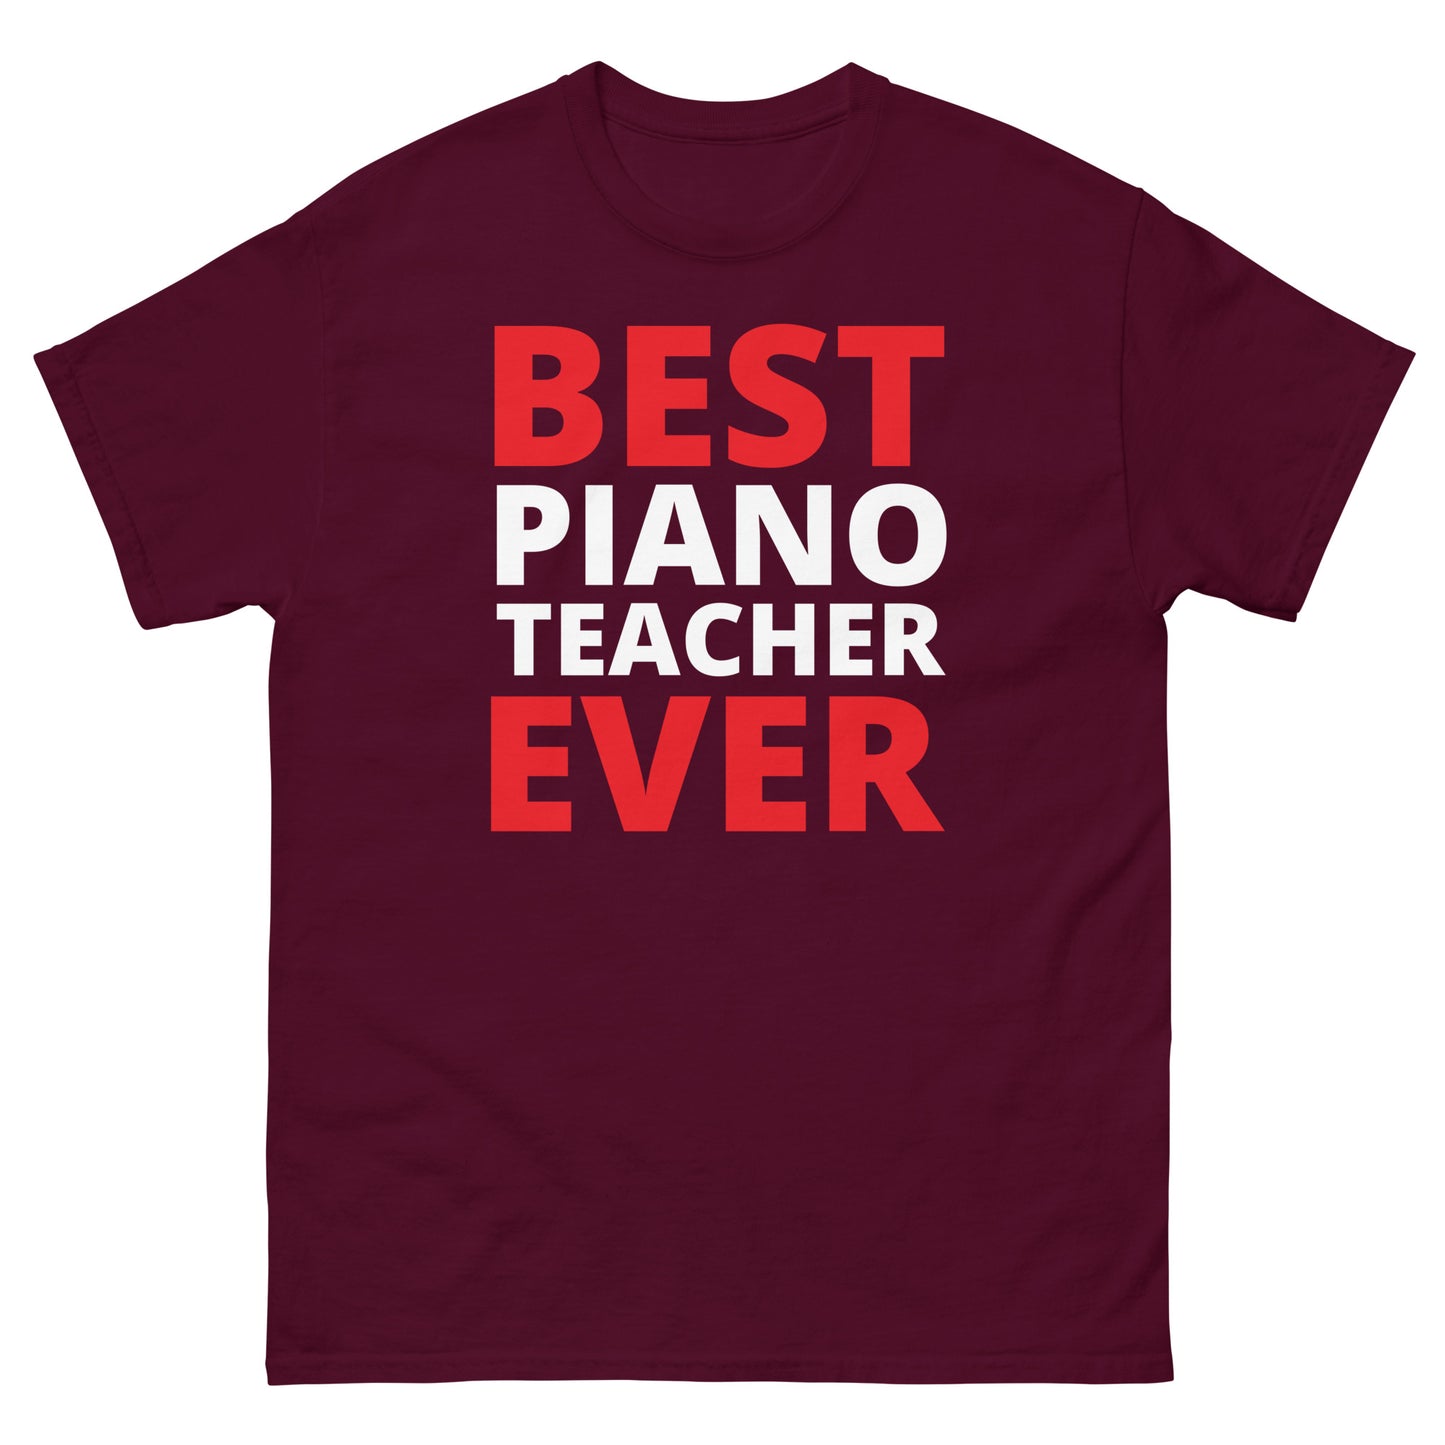 Best piano teacher ever classic tee